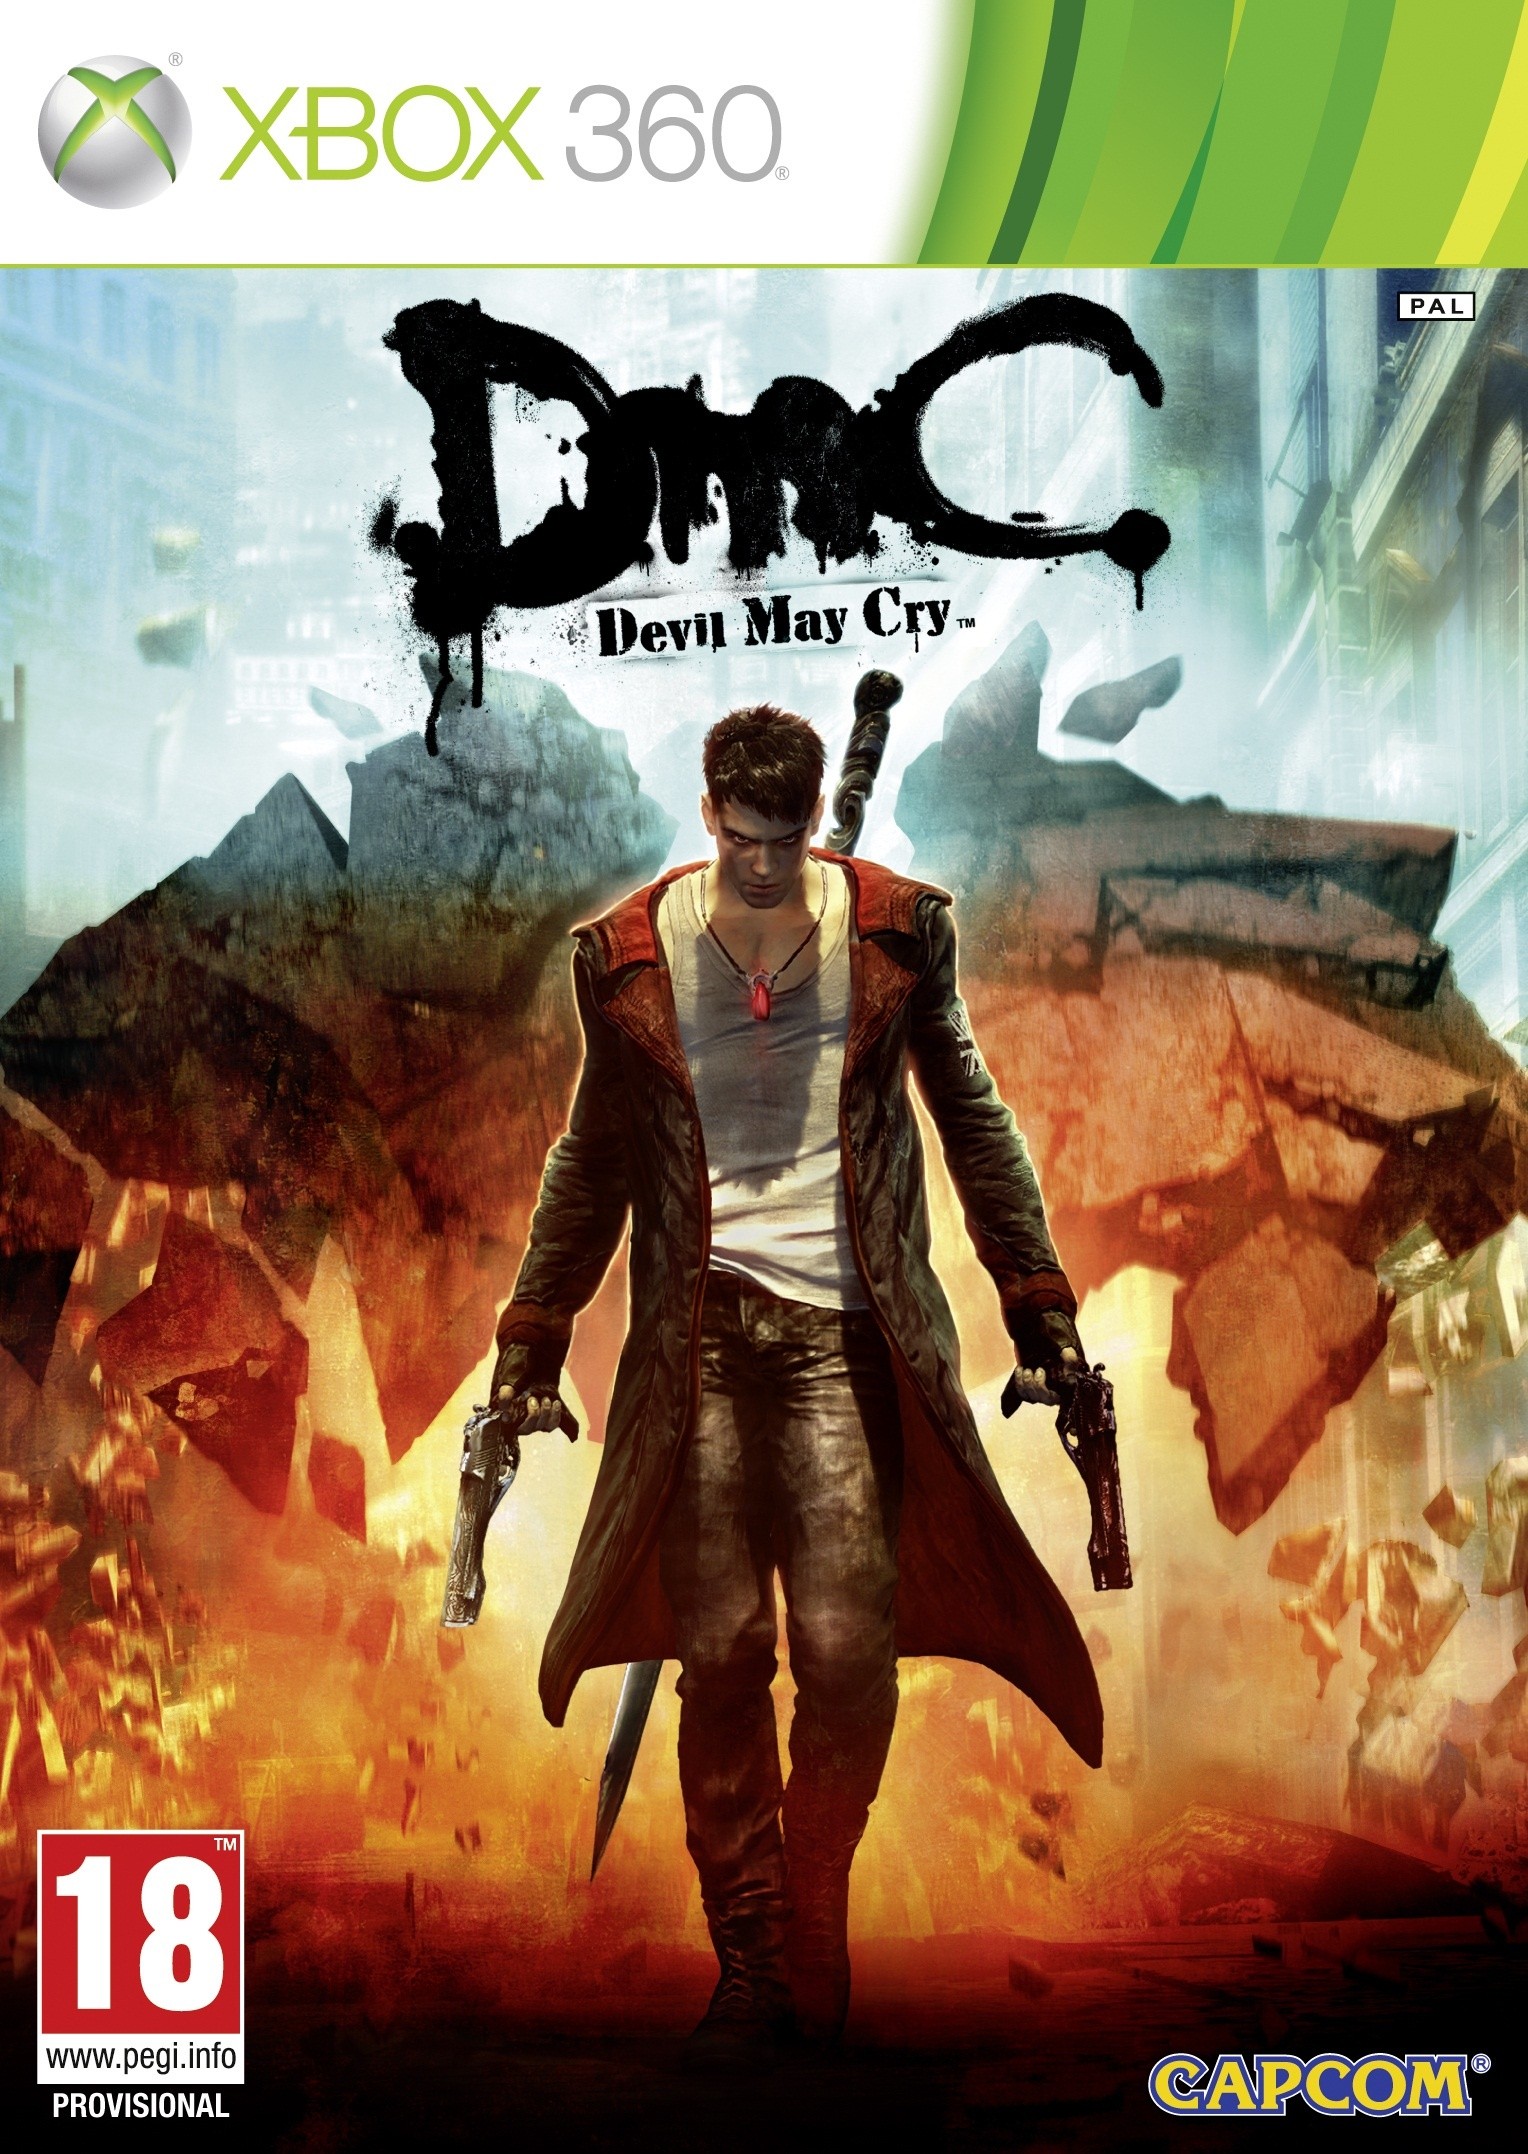 XBOX 360 - DmC: Devil May Cry